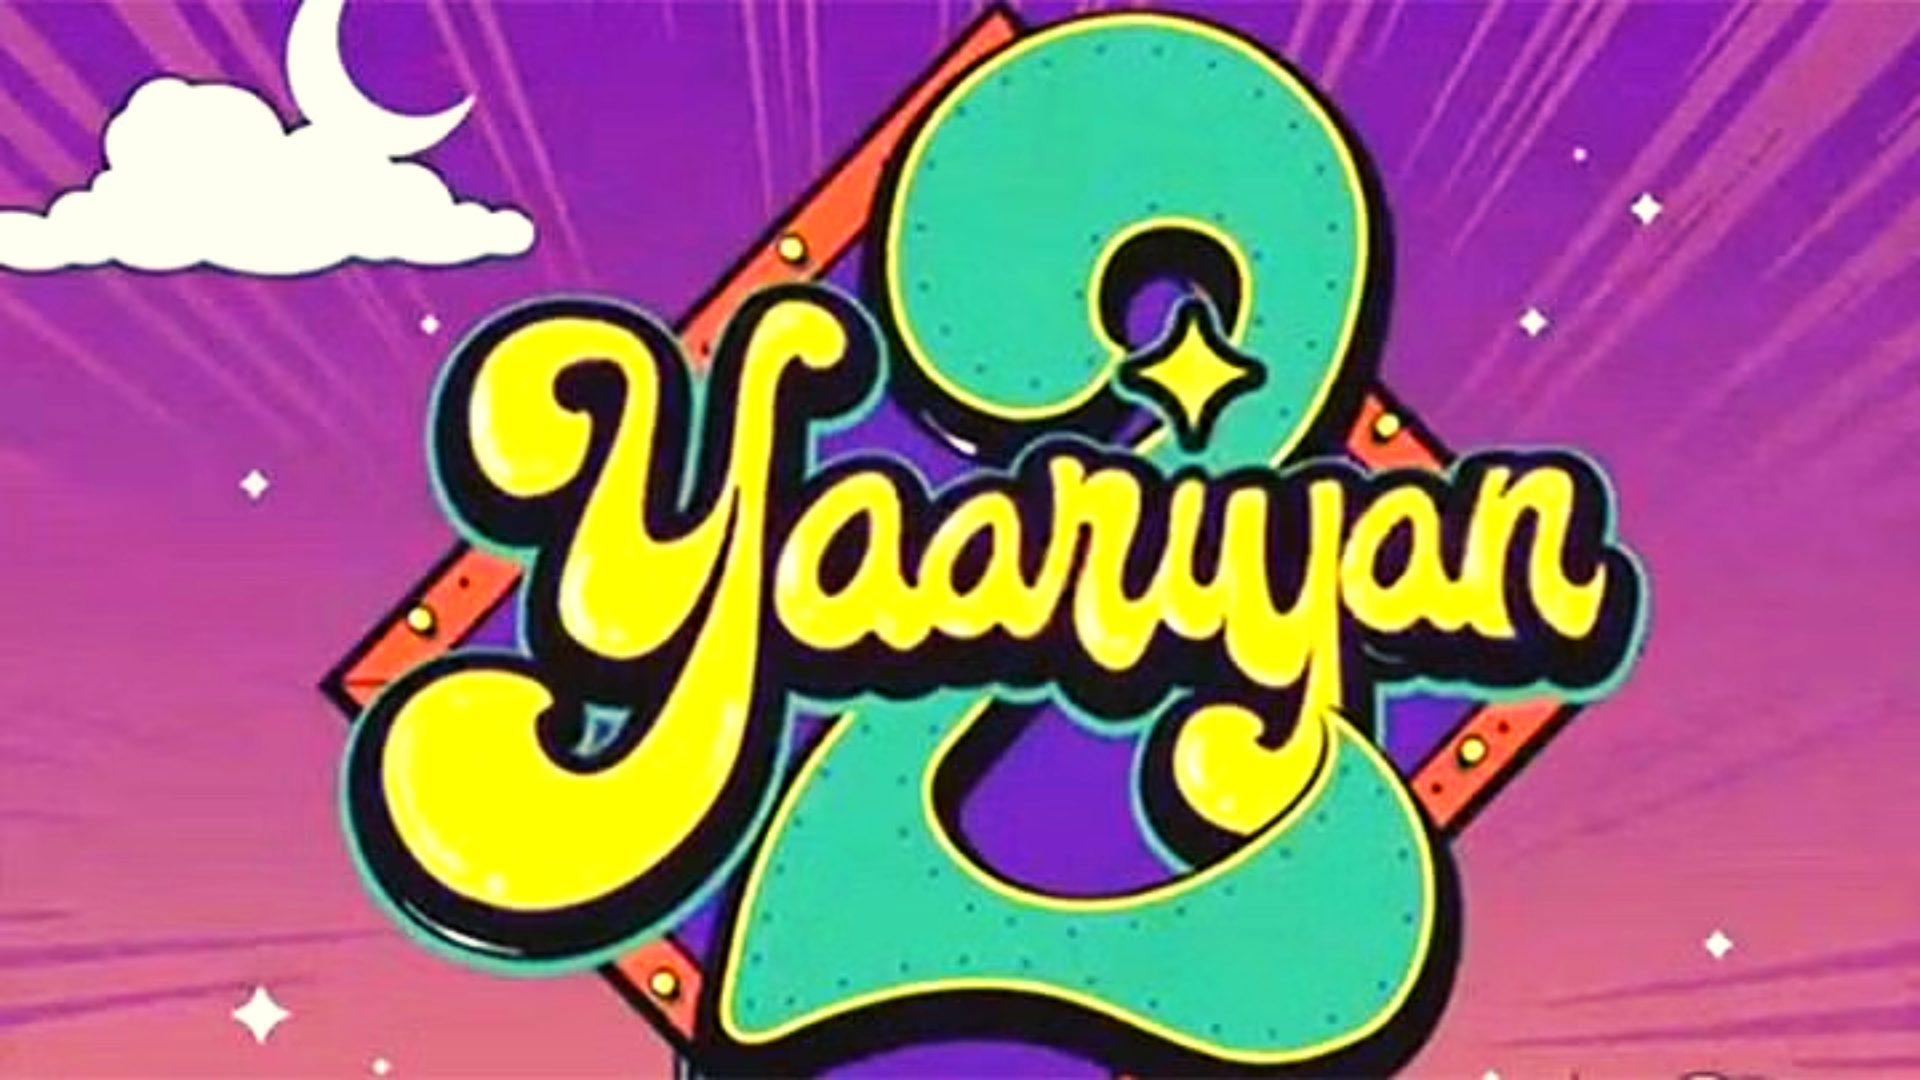 Yaariyan 2 Movie Ticket Offers: Release Date, Trailer, Cast & More